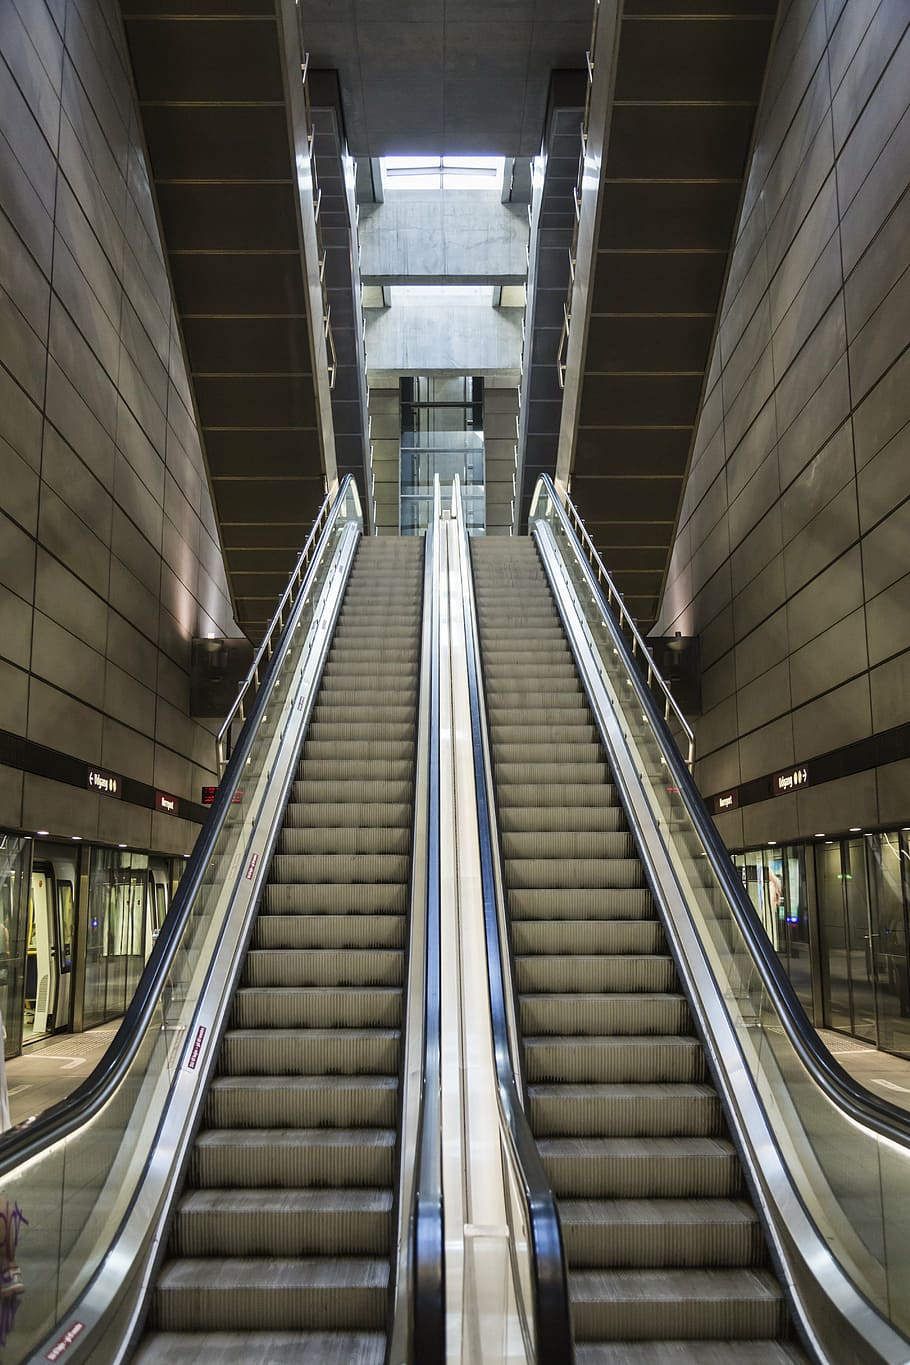 escada rolante, metrô, escadas, degraus, arquitetura, degraus e escadas, escada, trilhos, estrutura construída, moderno